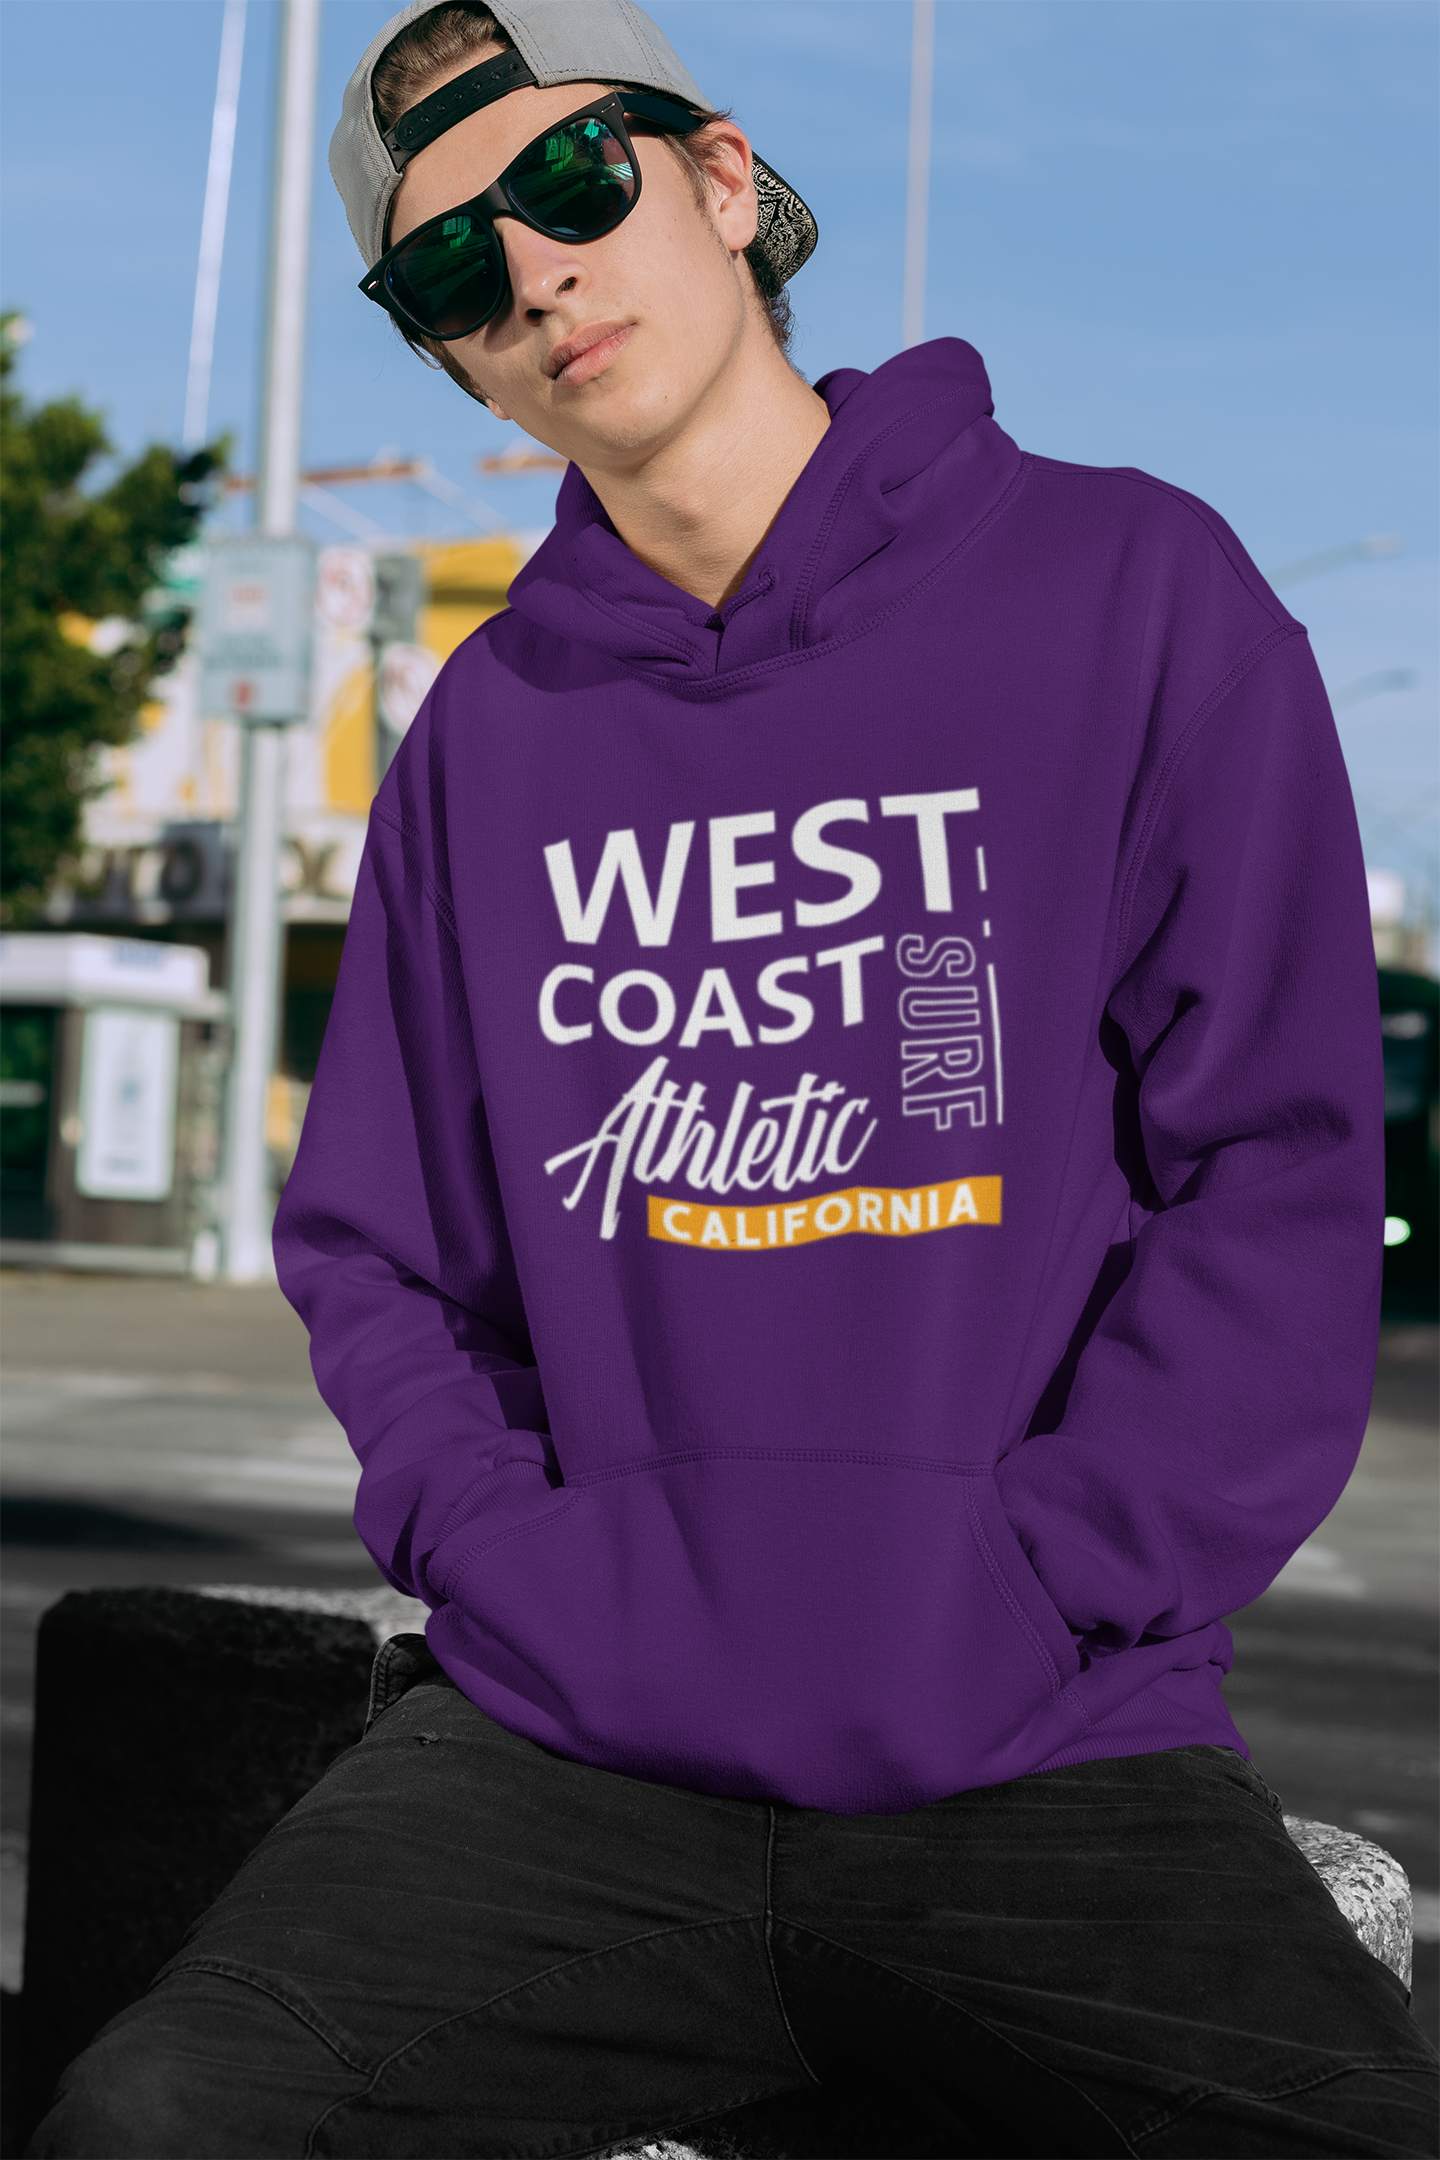 Stylish Hoodies for Men | West Coast Athletic Activewear / Athleisure purple